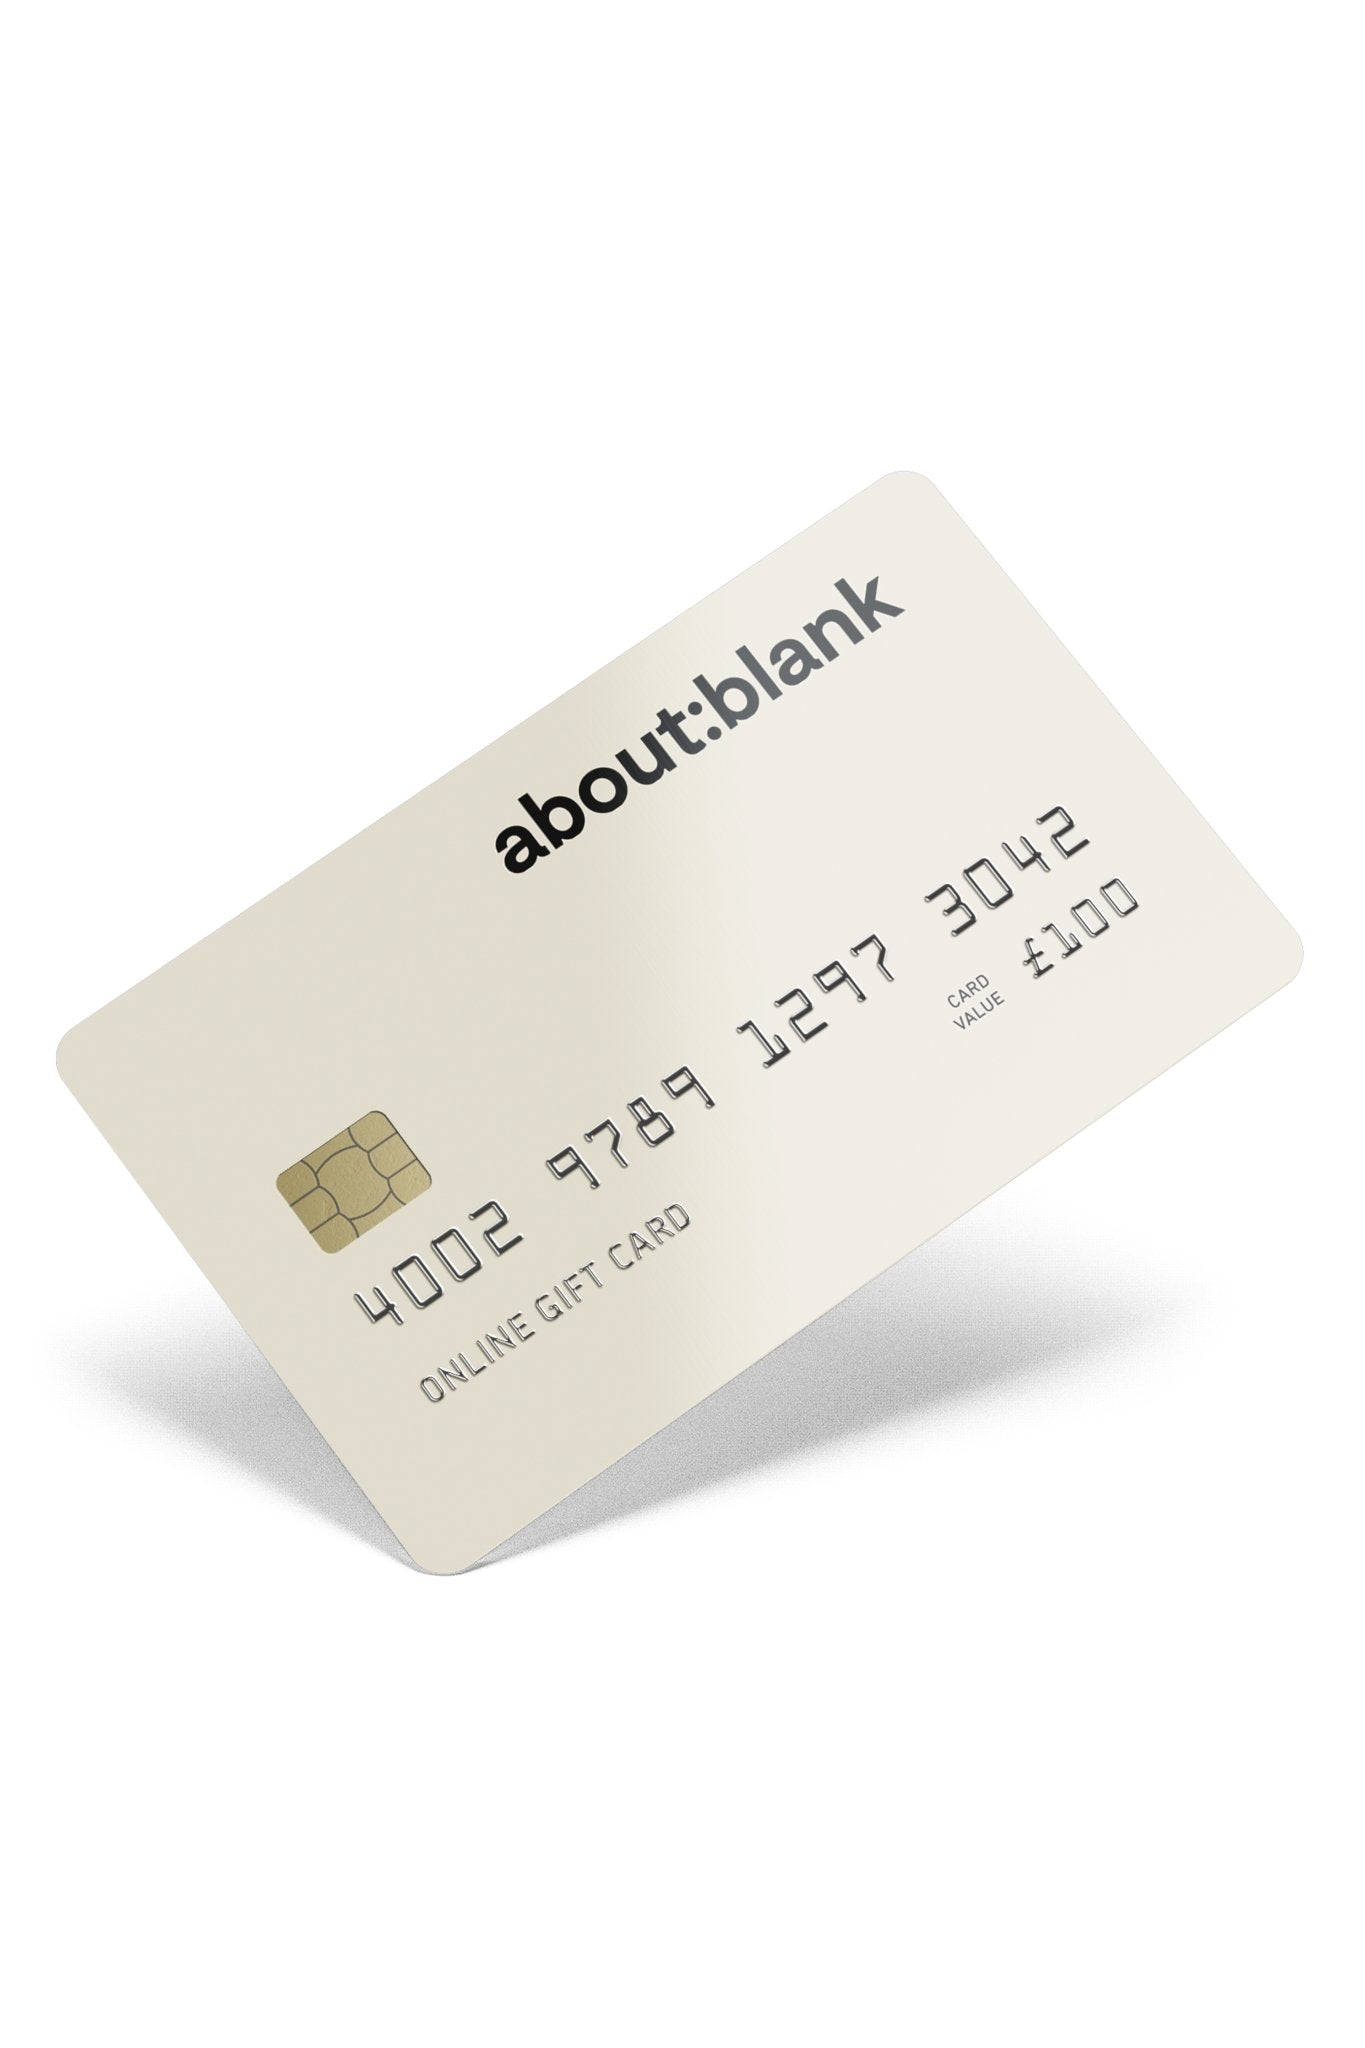 about:blankdigital gift card | £100